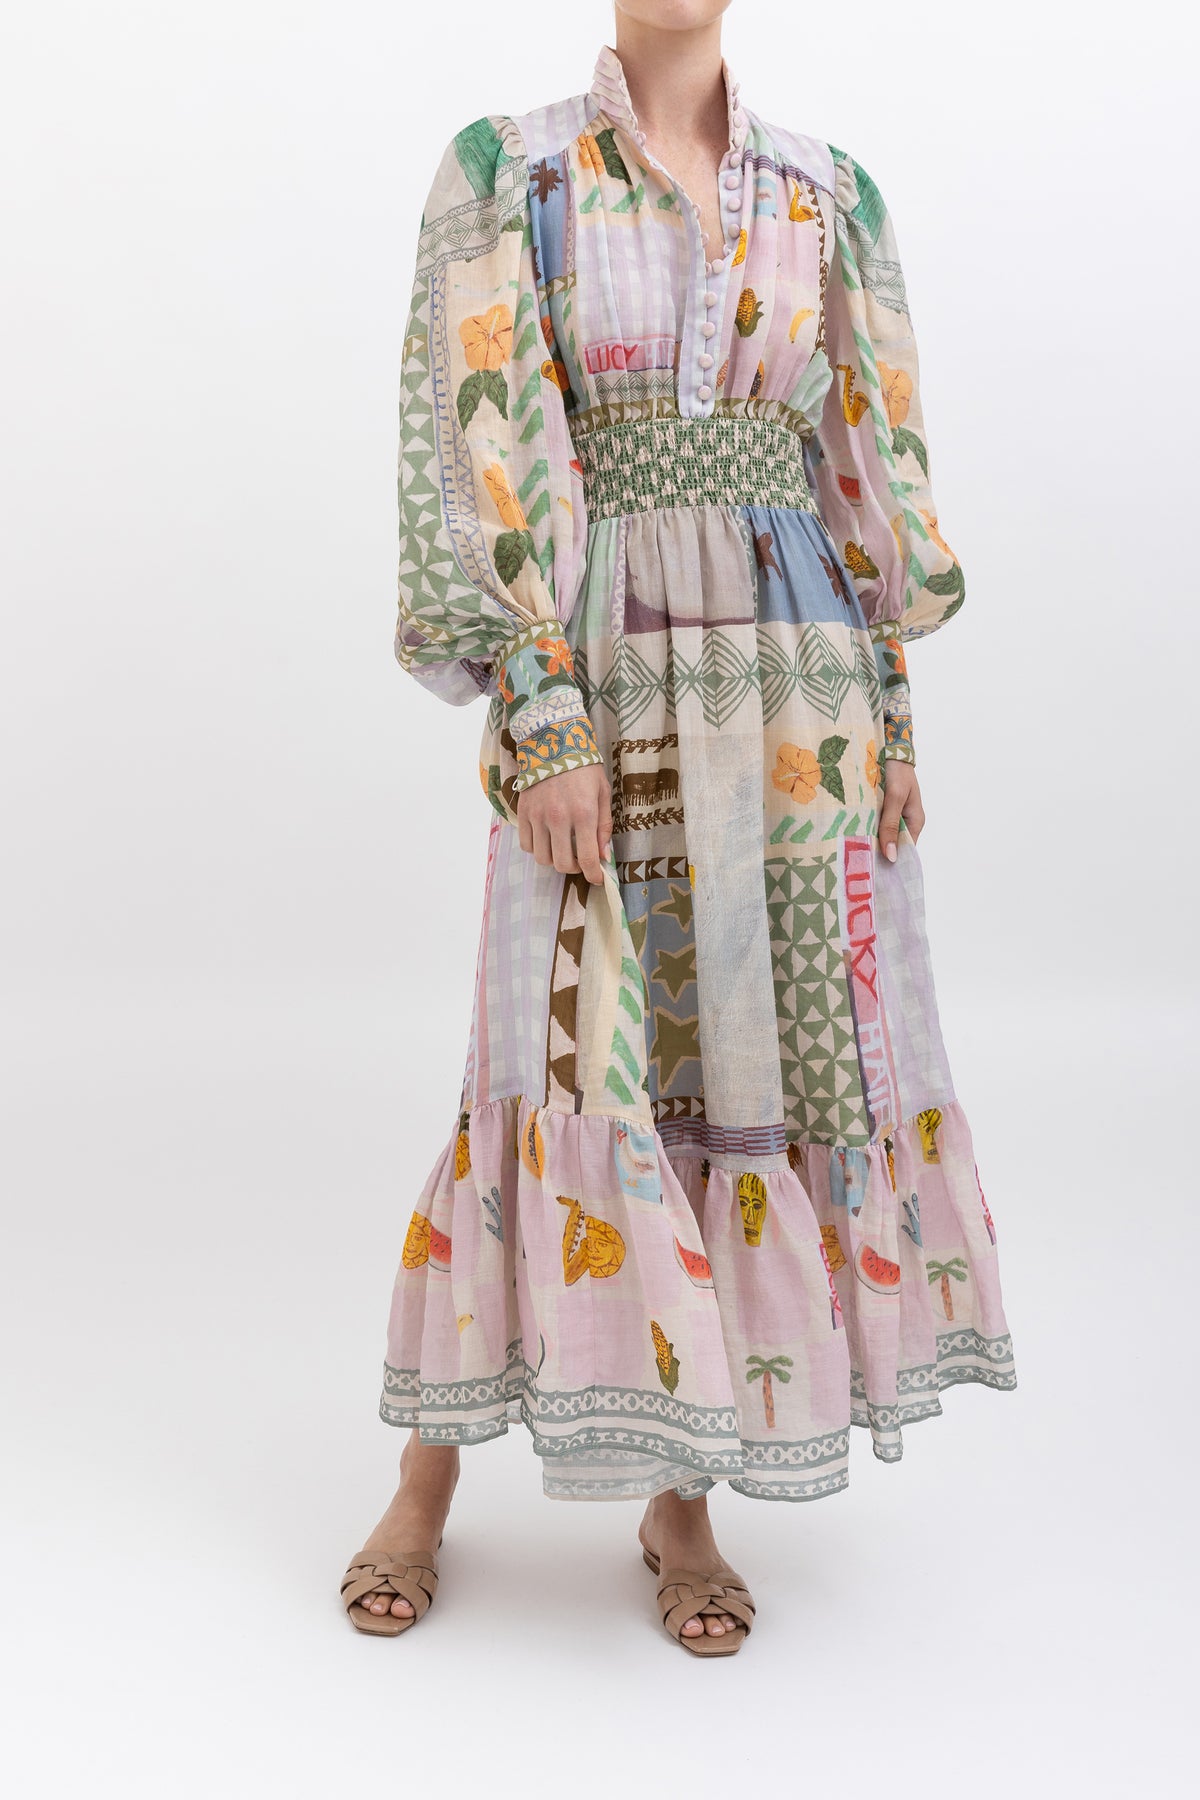 Emma Gale Printed Midi Dress